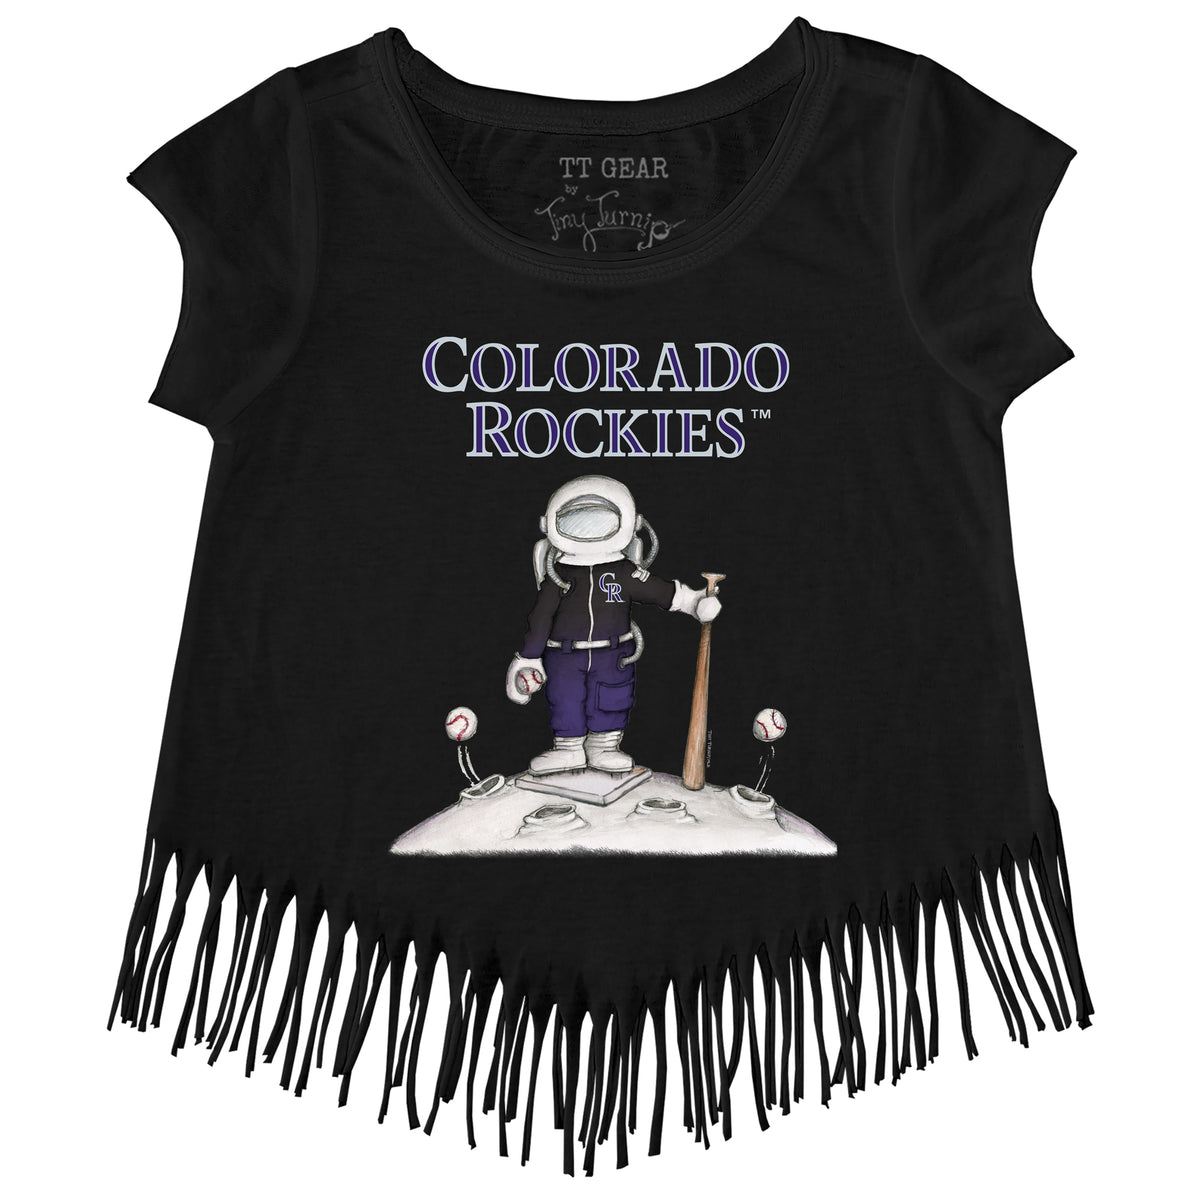 Colorado Rockies Gear, Rockies Merchandise, Rockies Apparel, Store